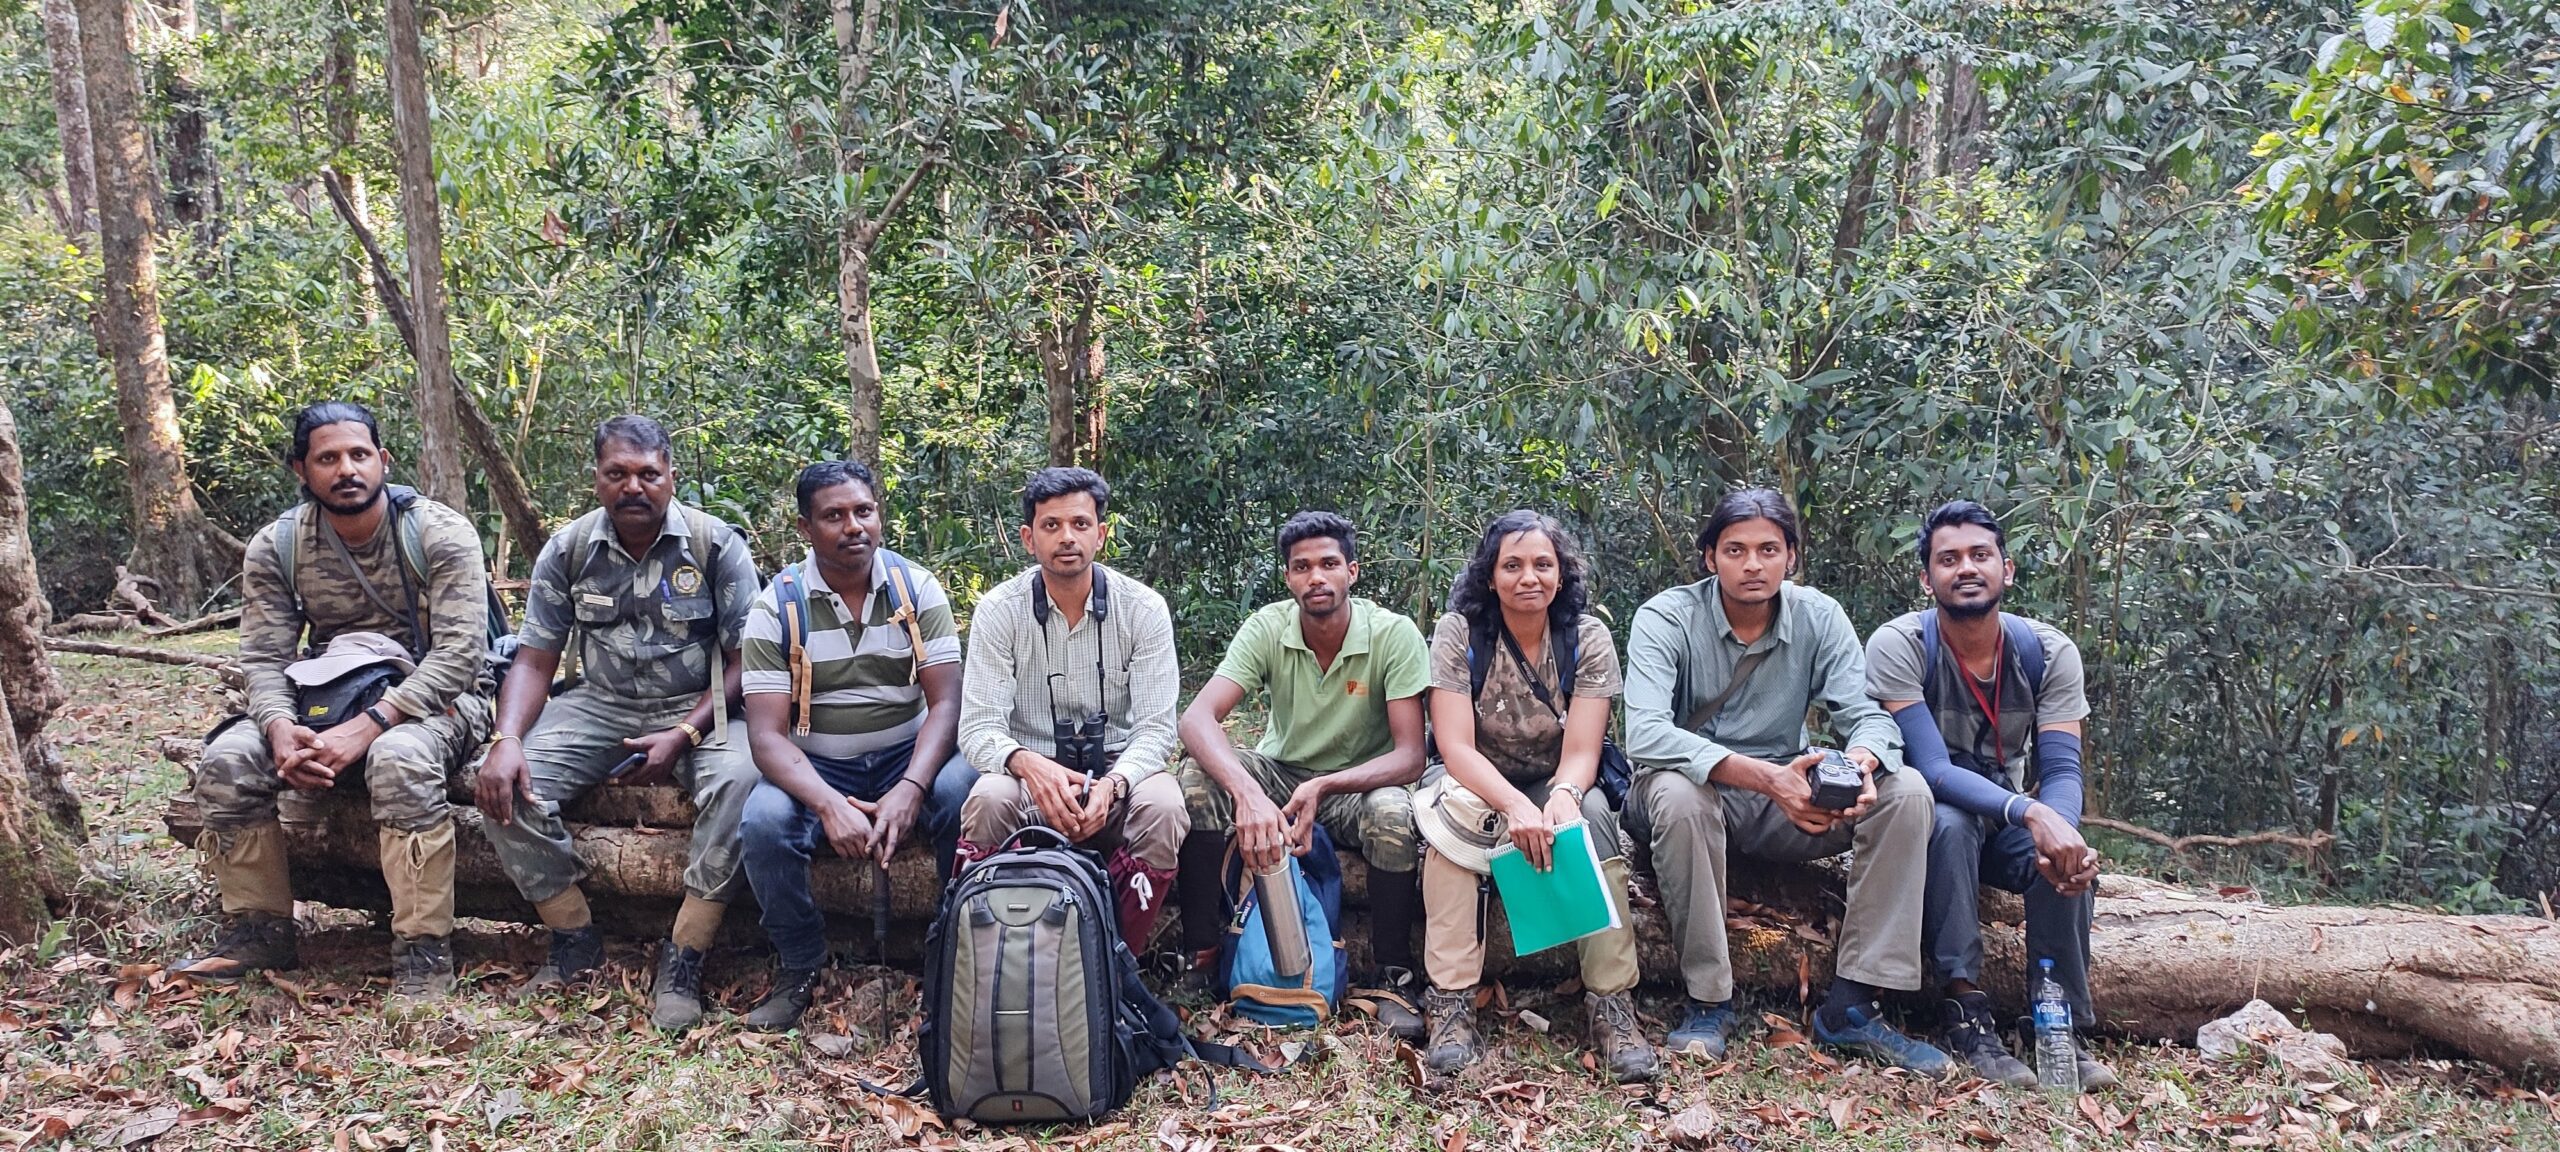 Among those behind protected species on Anamalai Hills, Left to right: Srinivasan Kasinathan (restoration ecologist), forest department staff Selvakumar, Moorthi G, Navendu Page, Rajesh R, Kshama Bhat, AP Madhavan, Akhil Murali. (Nature Conservation Foundation)